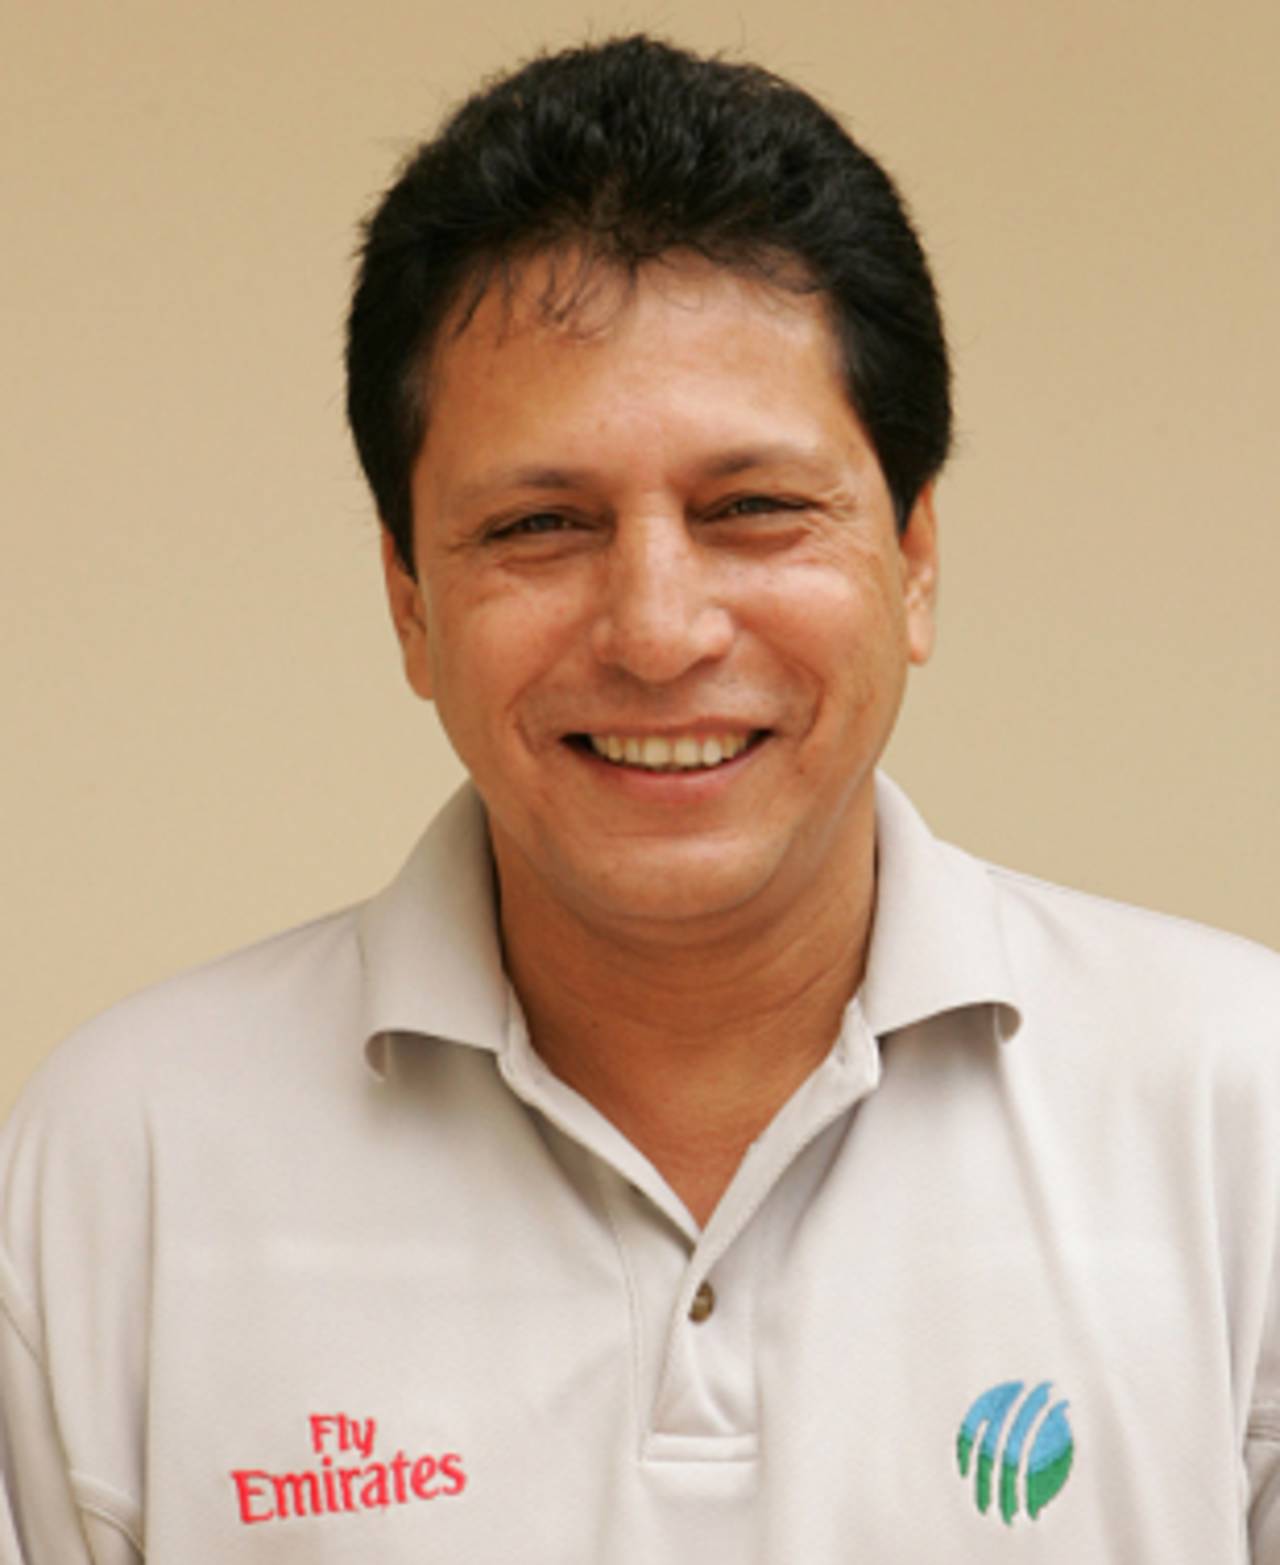 Portrait of Nadir Shah, October 5, 2009